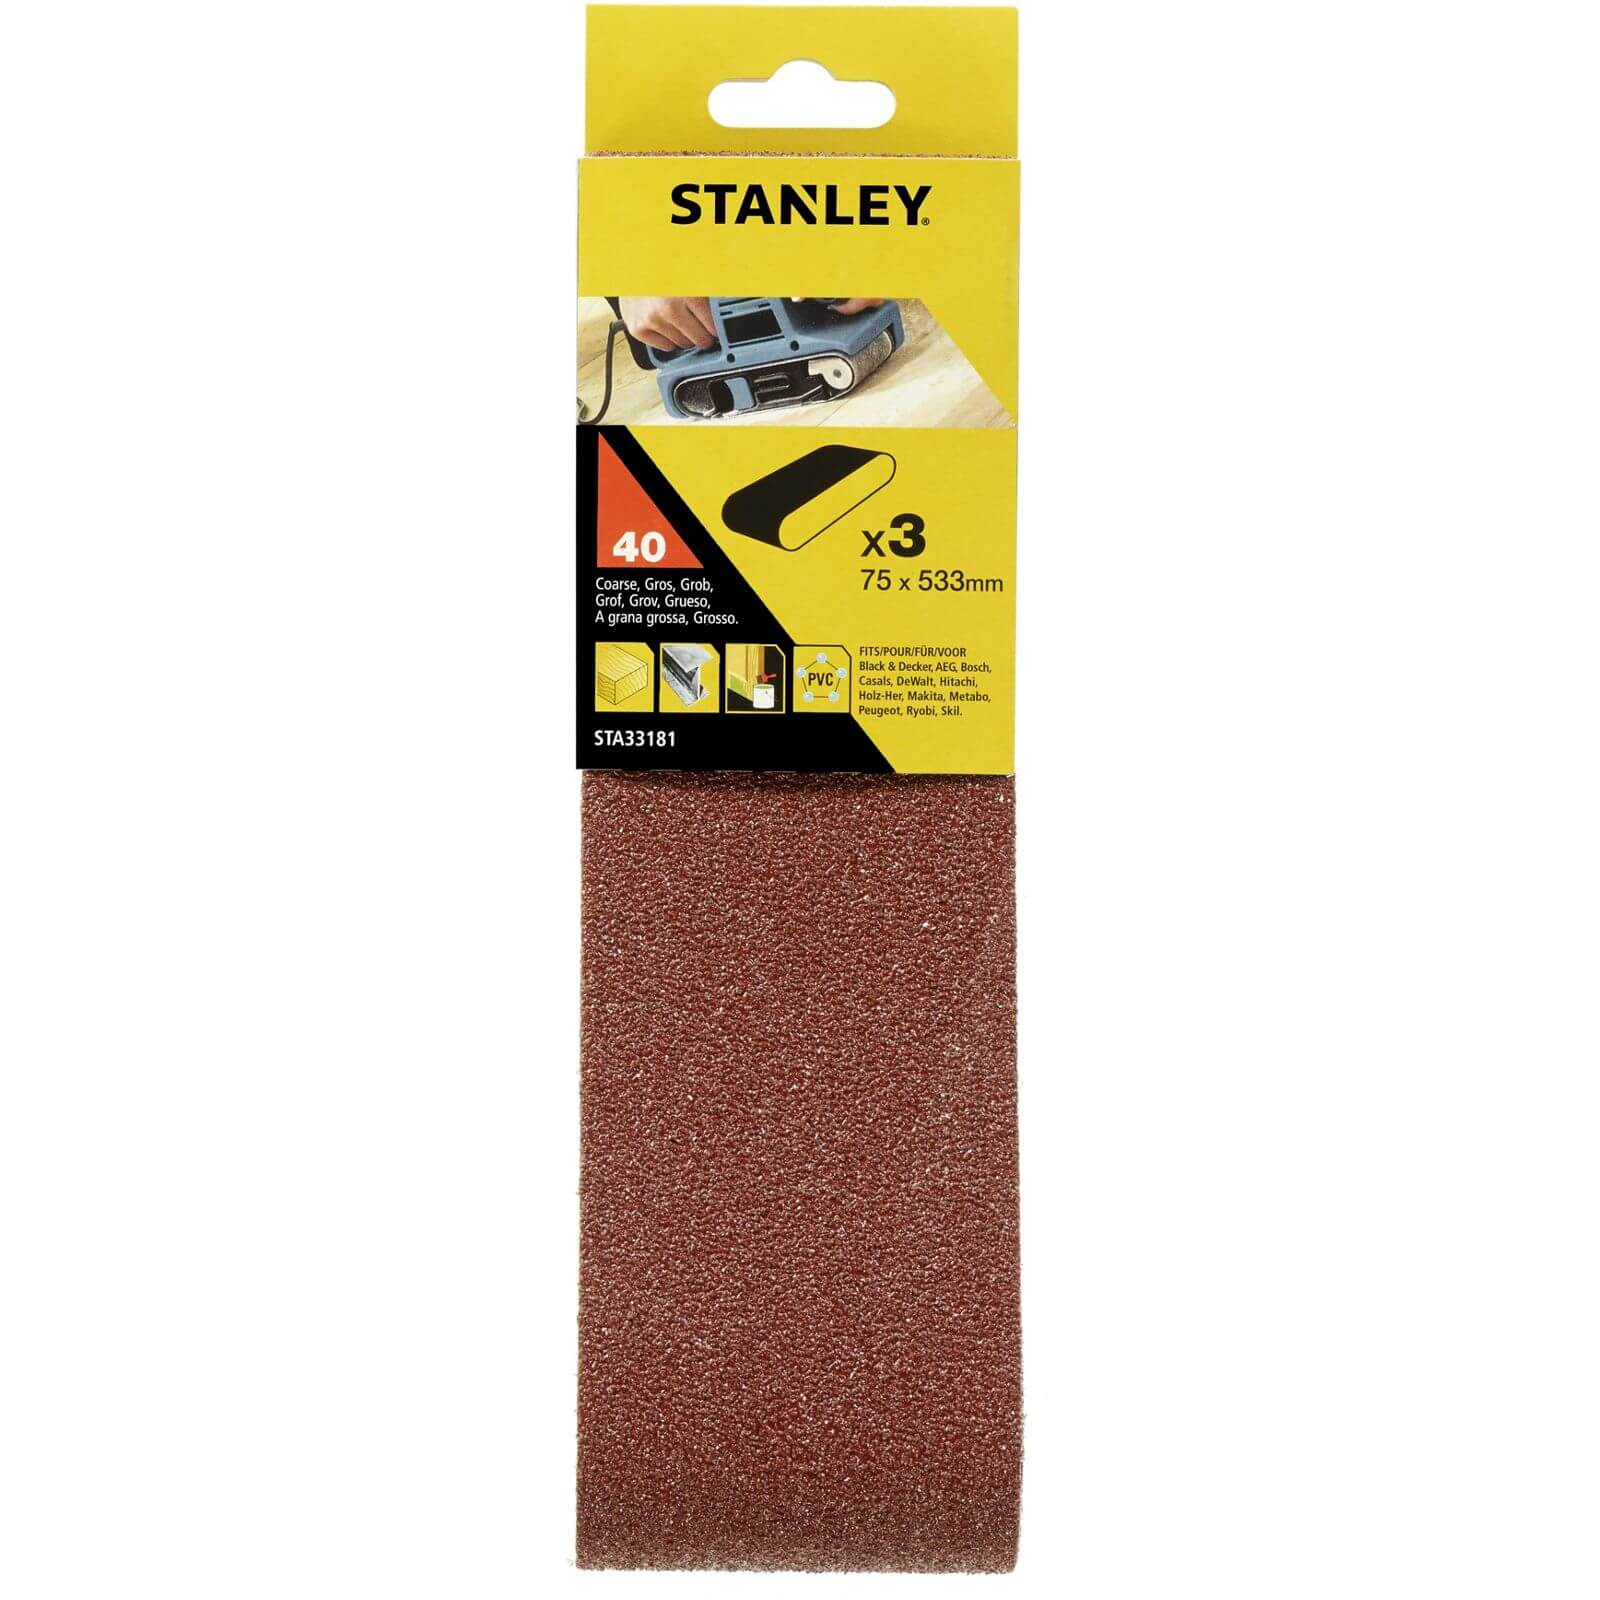 Photo of Stanley Belt Sander Belts 75x533 40g - Sta33181-xj